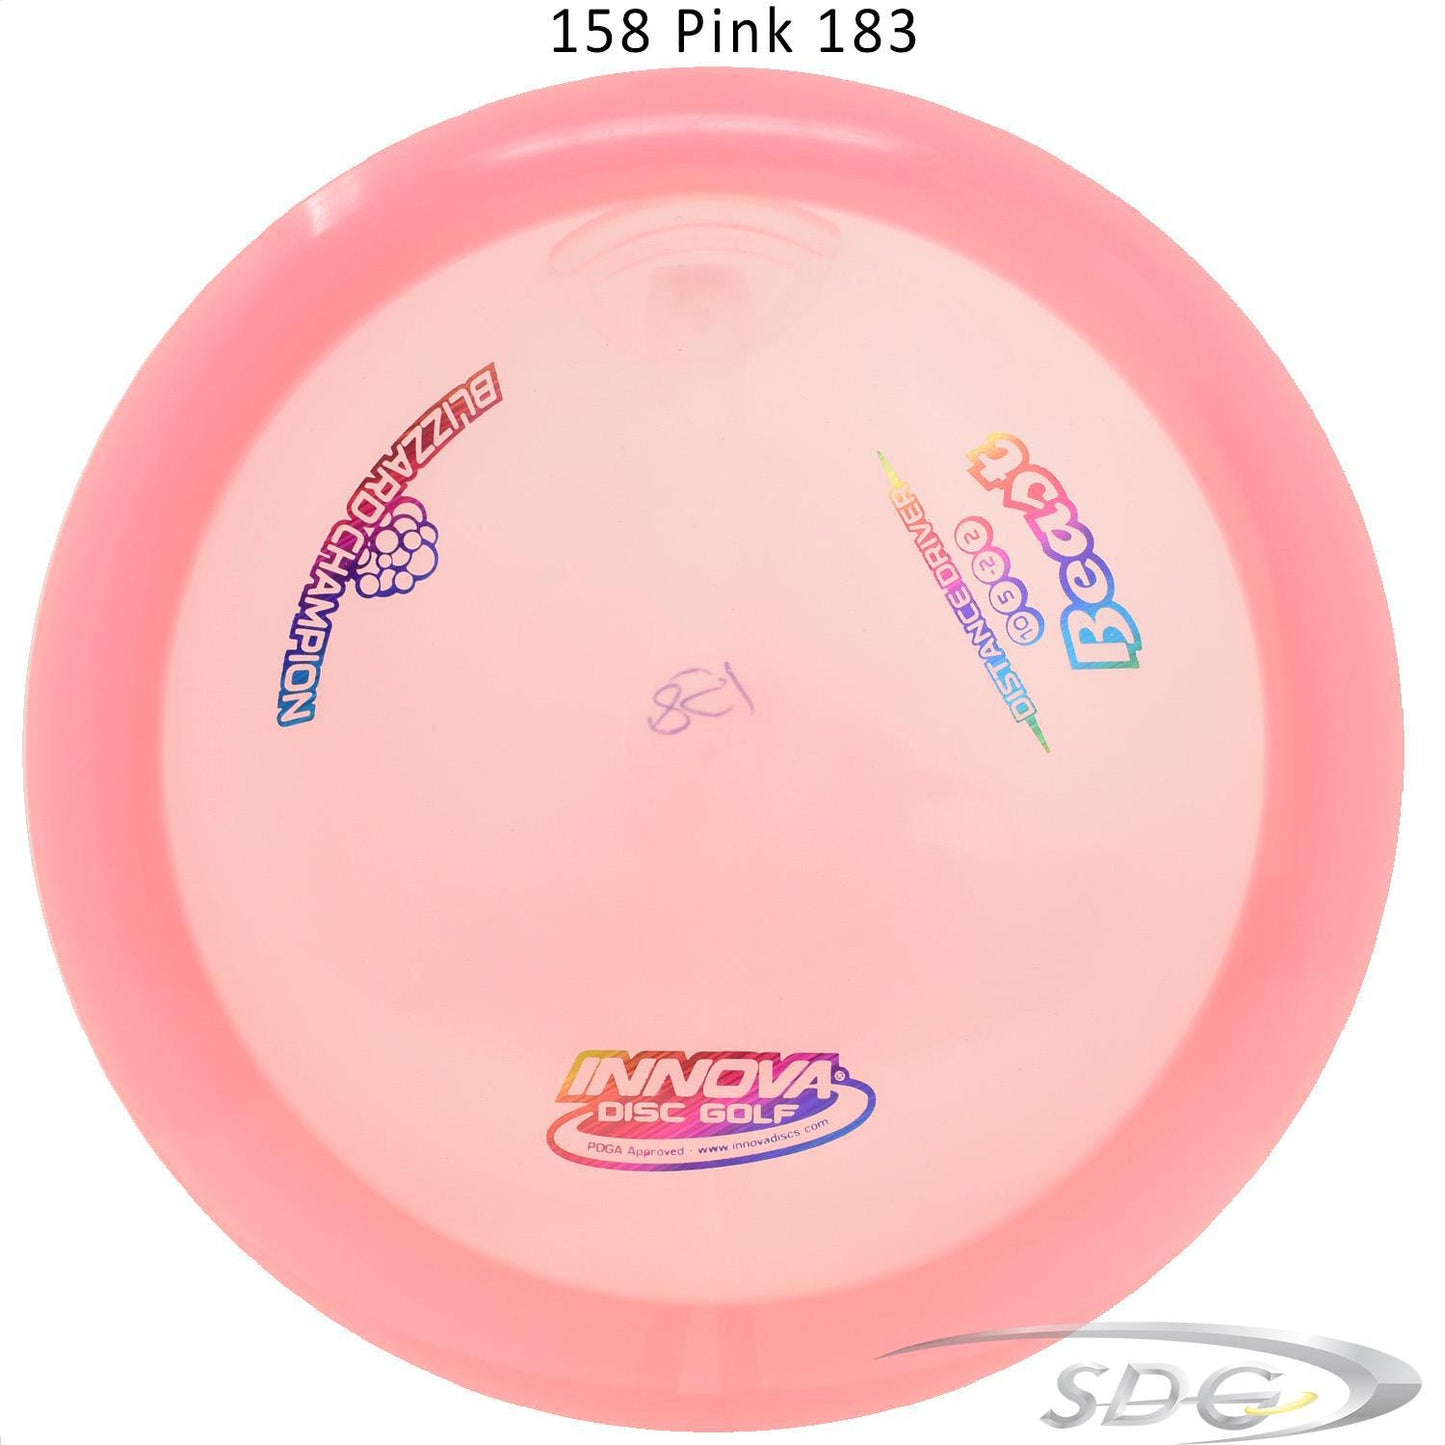 innova-blizzard-champion-beast-disc-golf-distance-driver 158 Pink 183